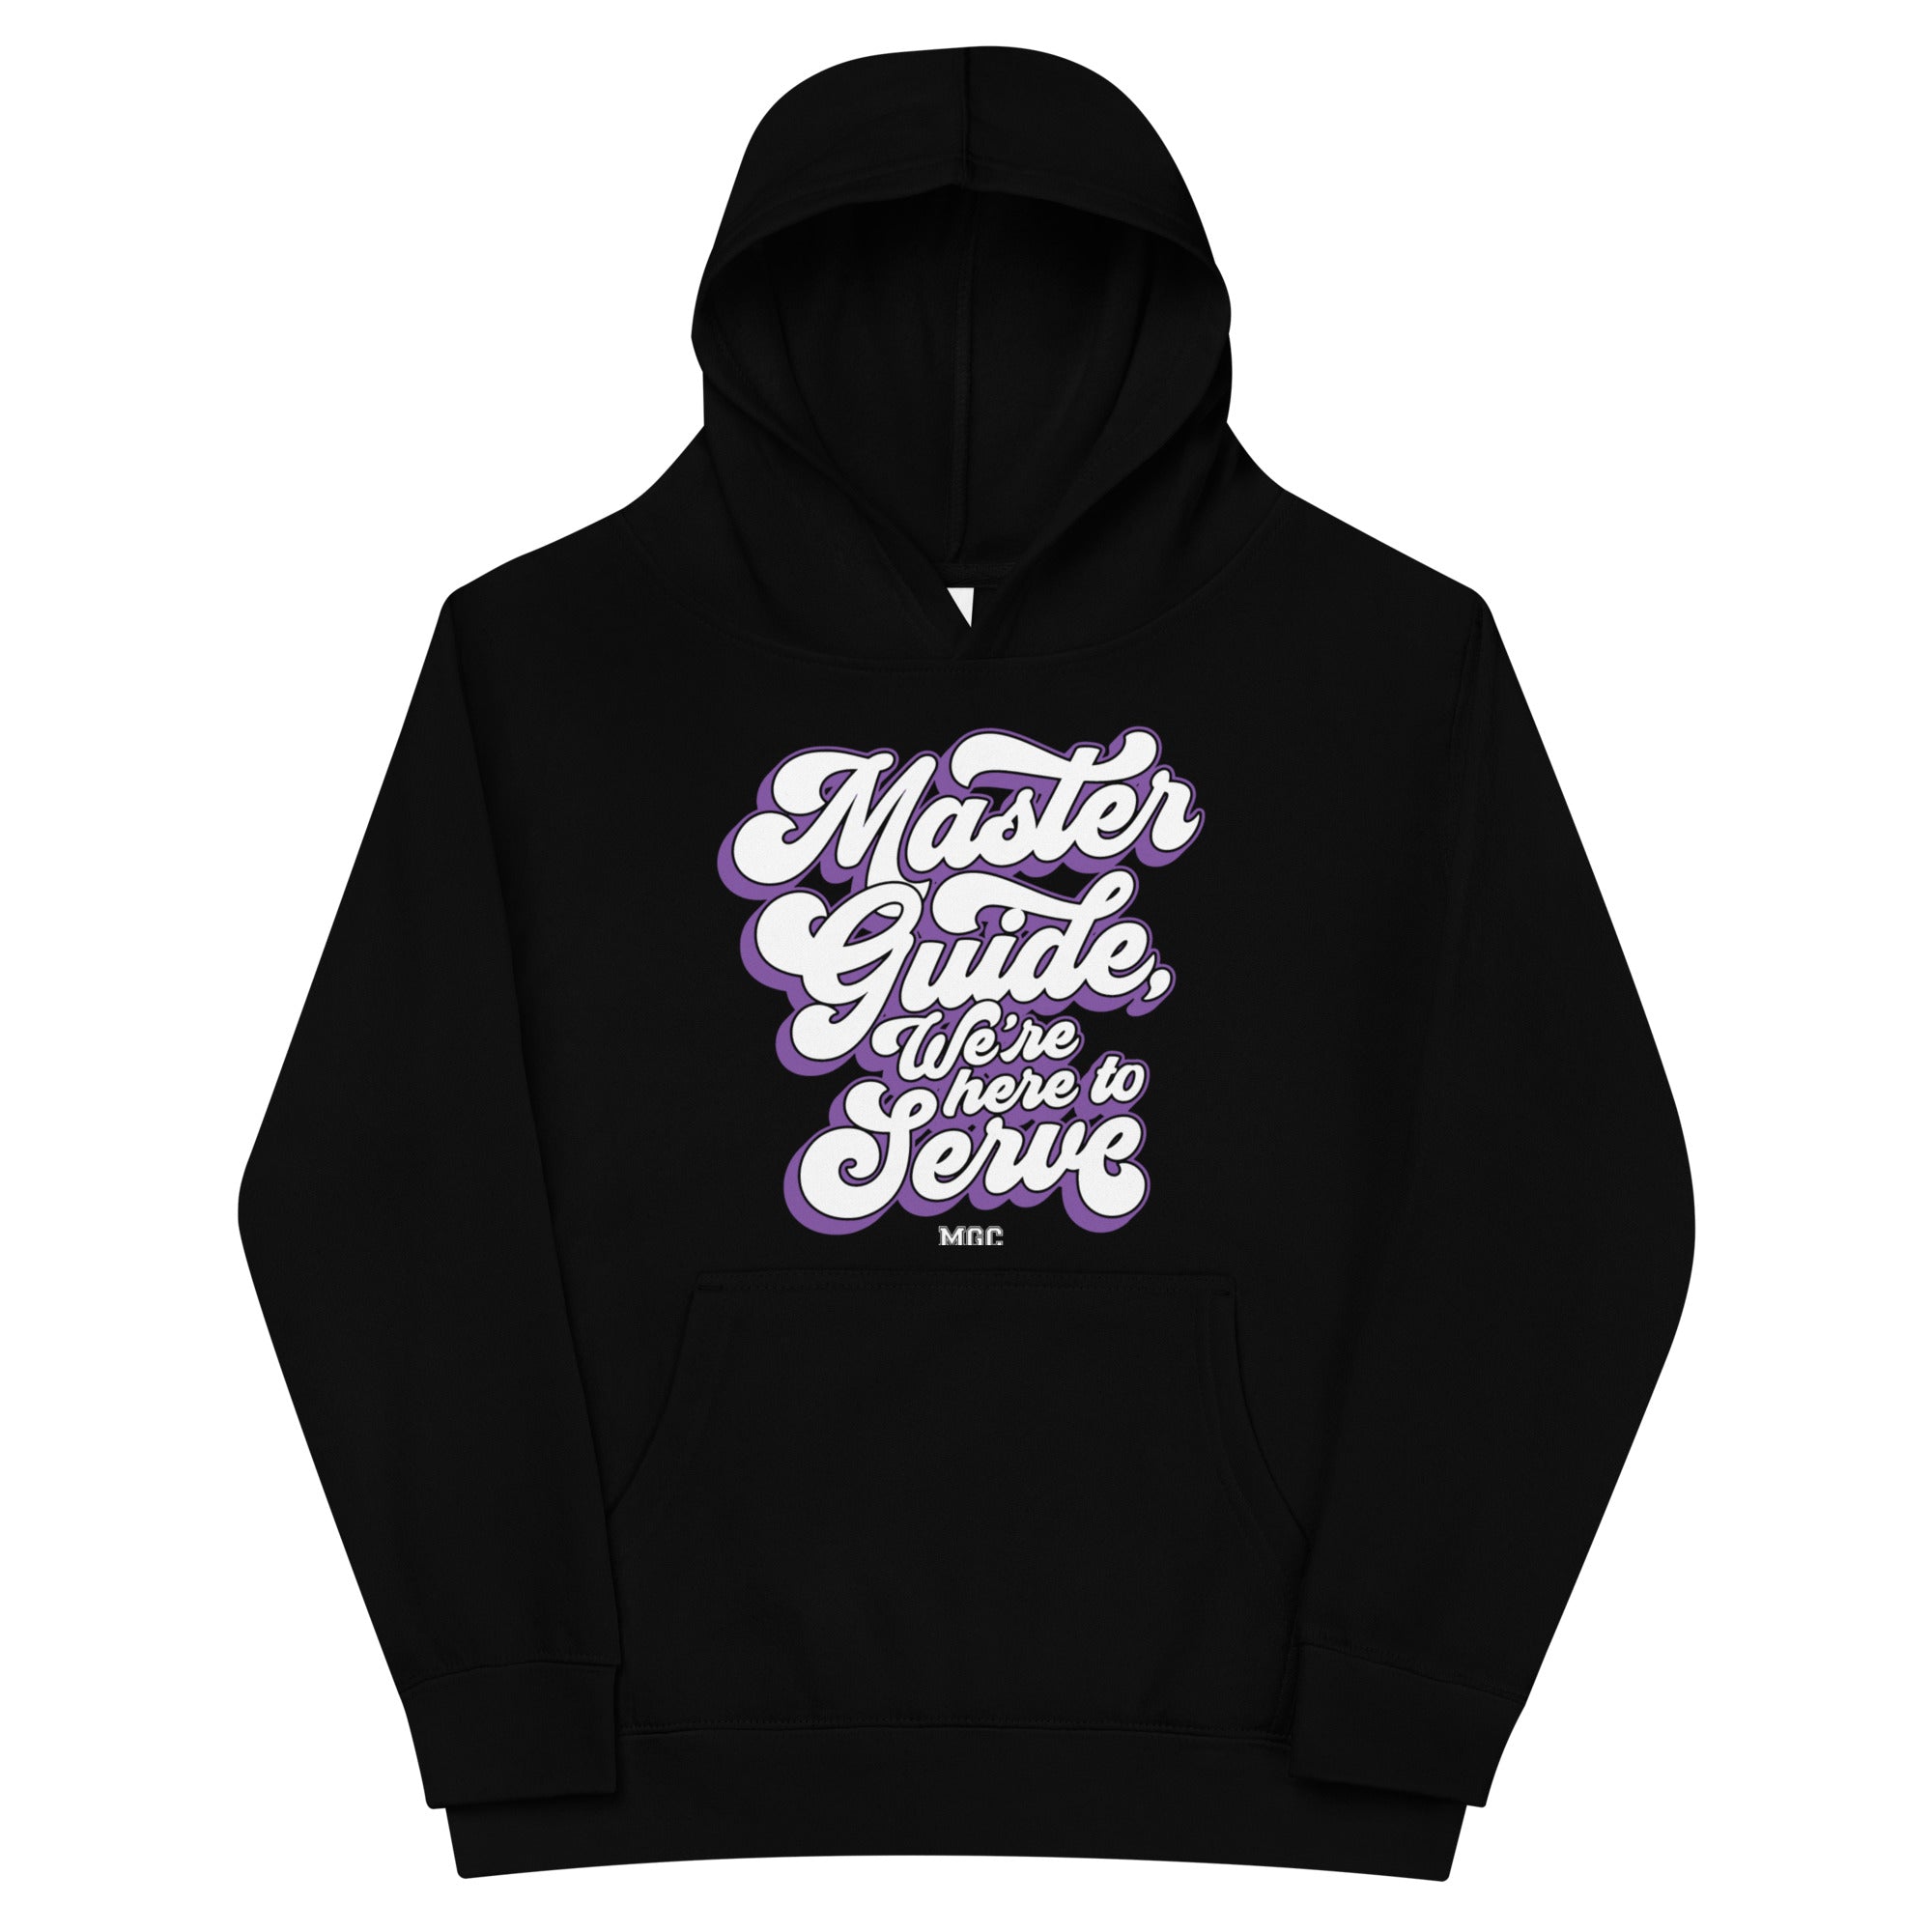 MGC Kids fleece hoodie We're here to serve